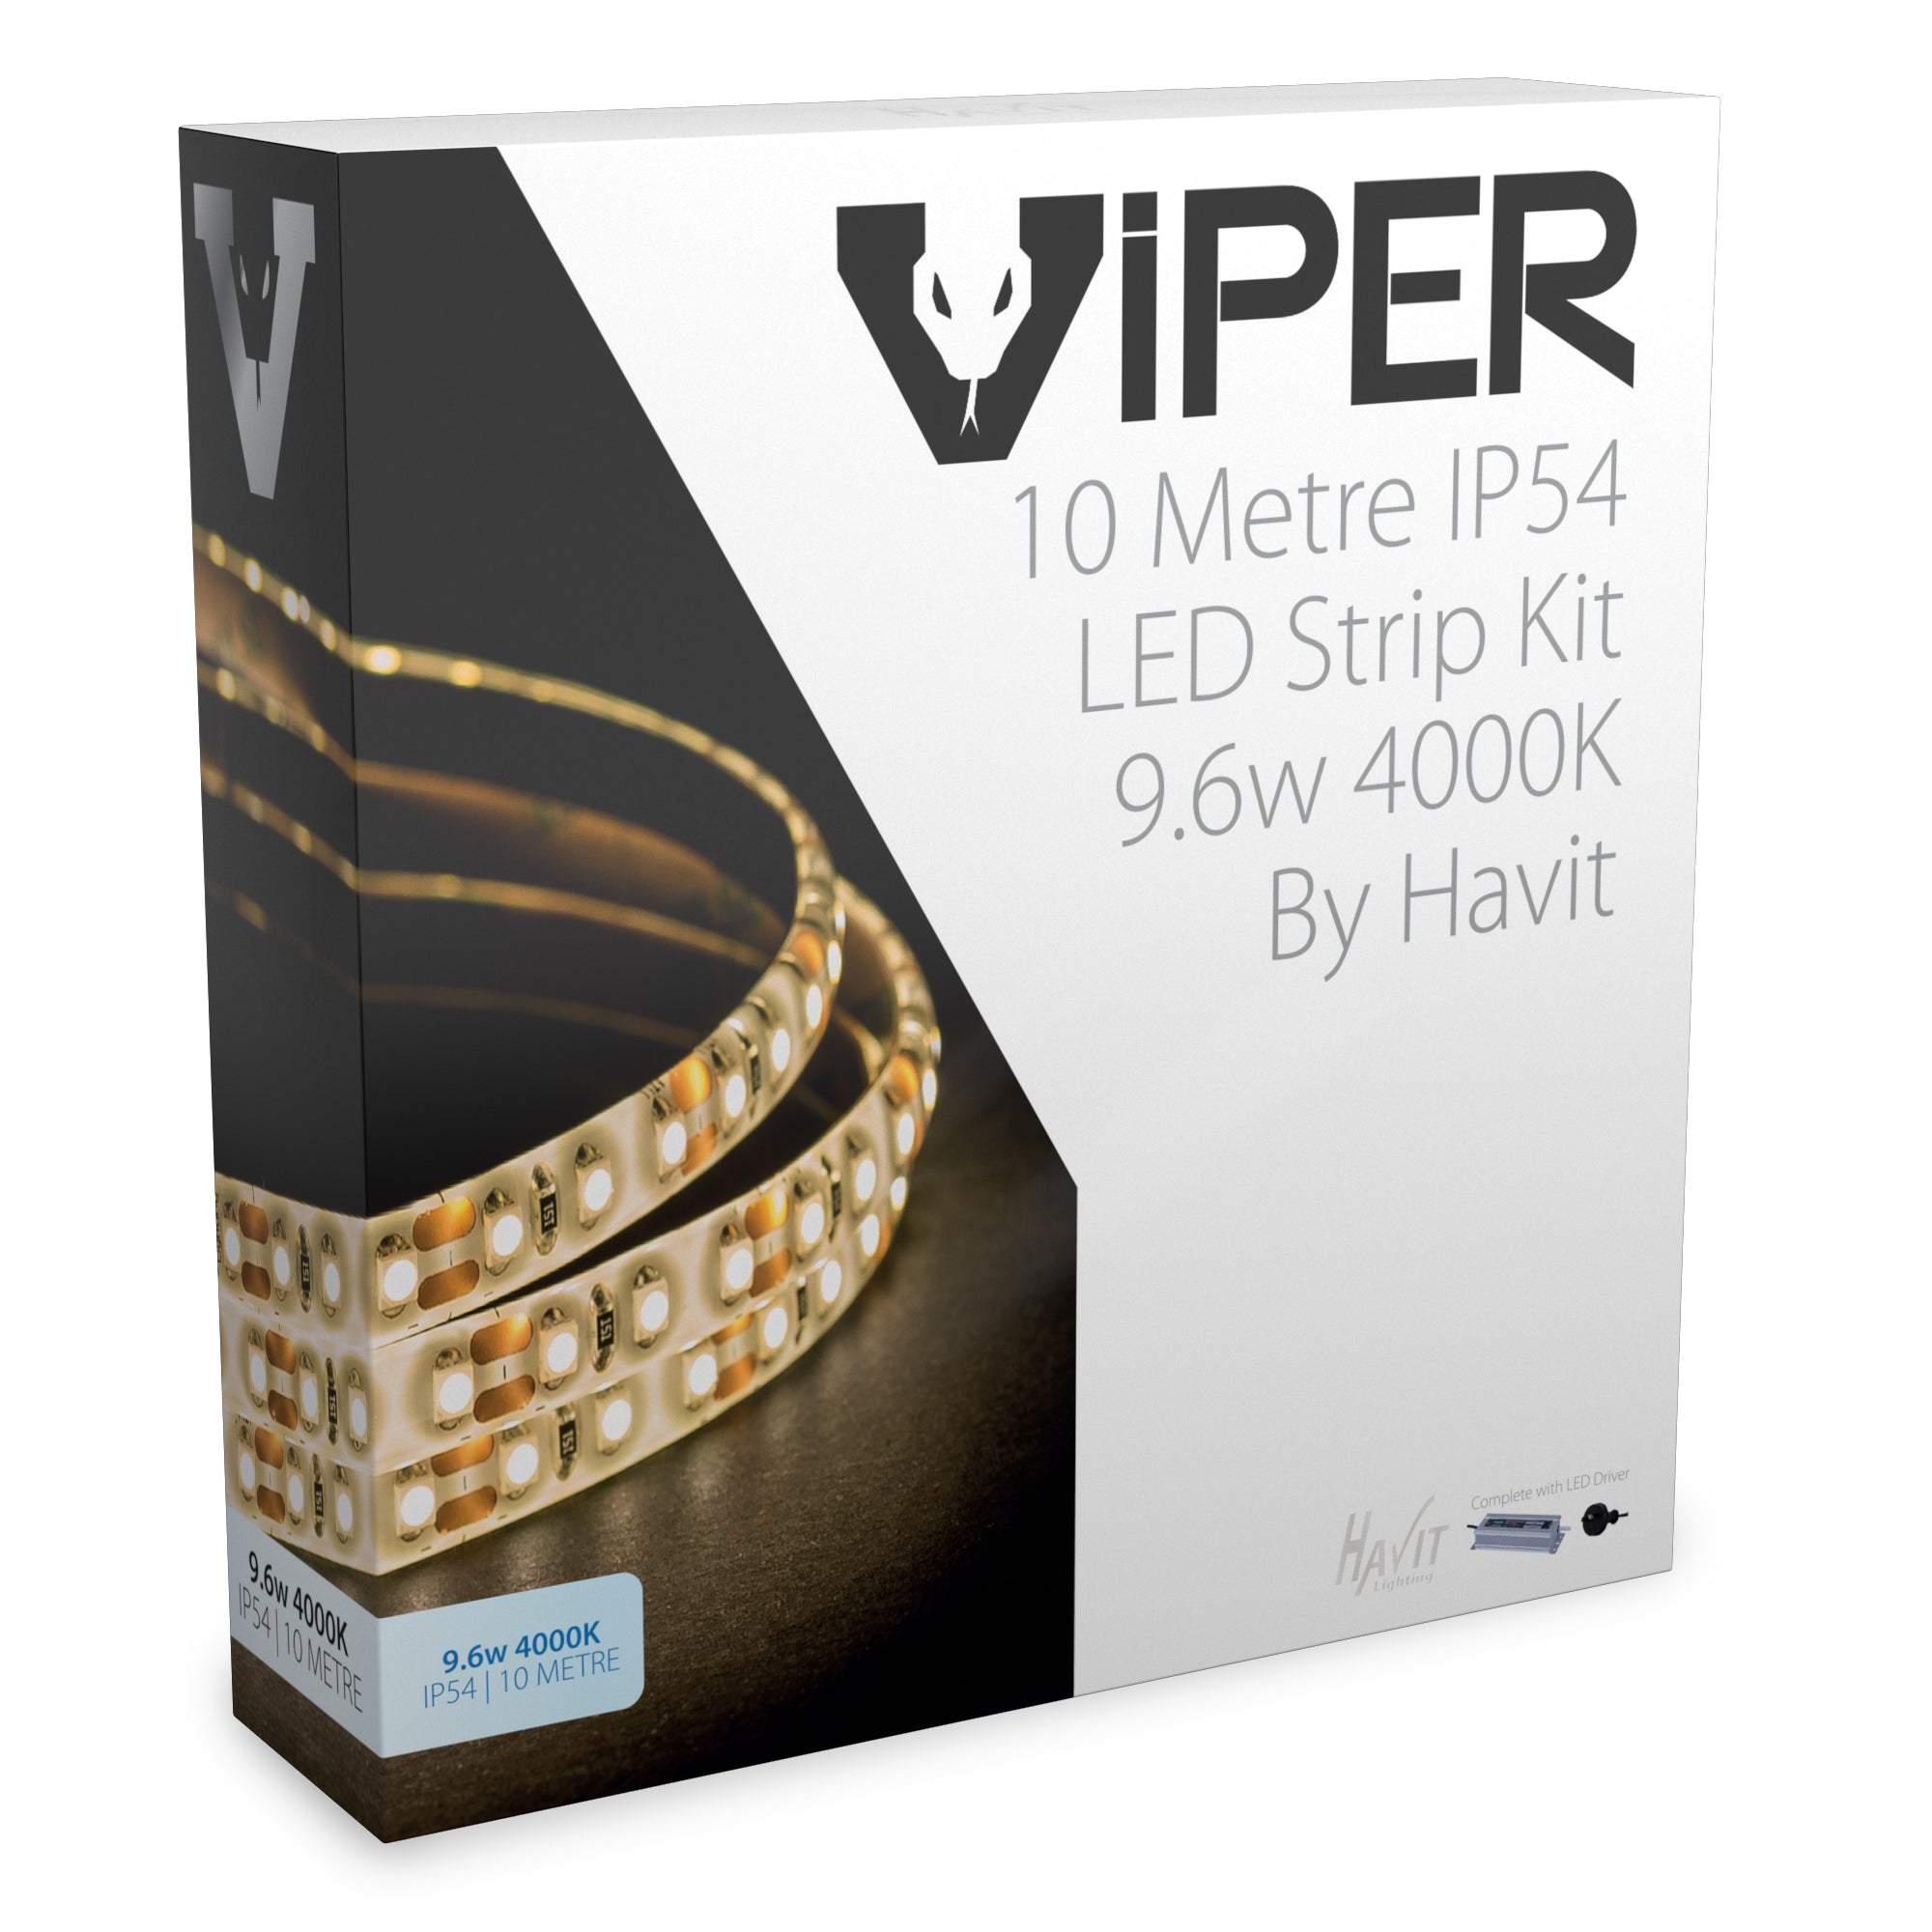 VPR9745IP54-120-10M - VIPER 9.6w 10m LED Strip kit 4000k